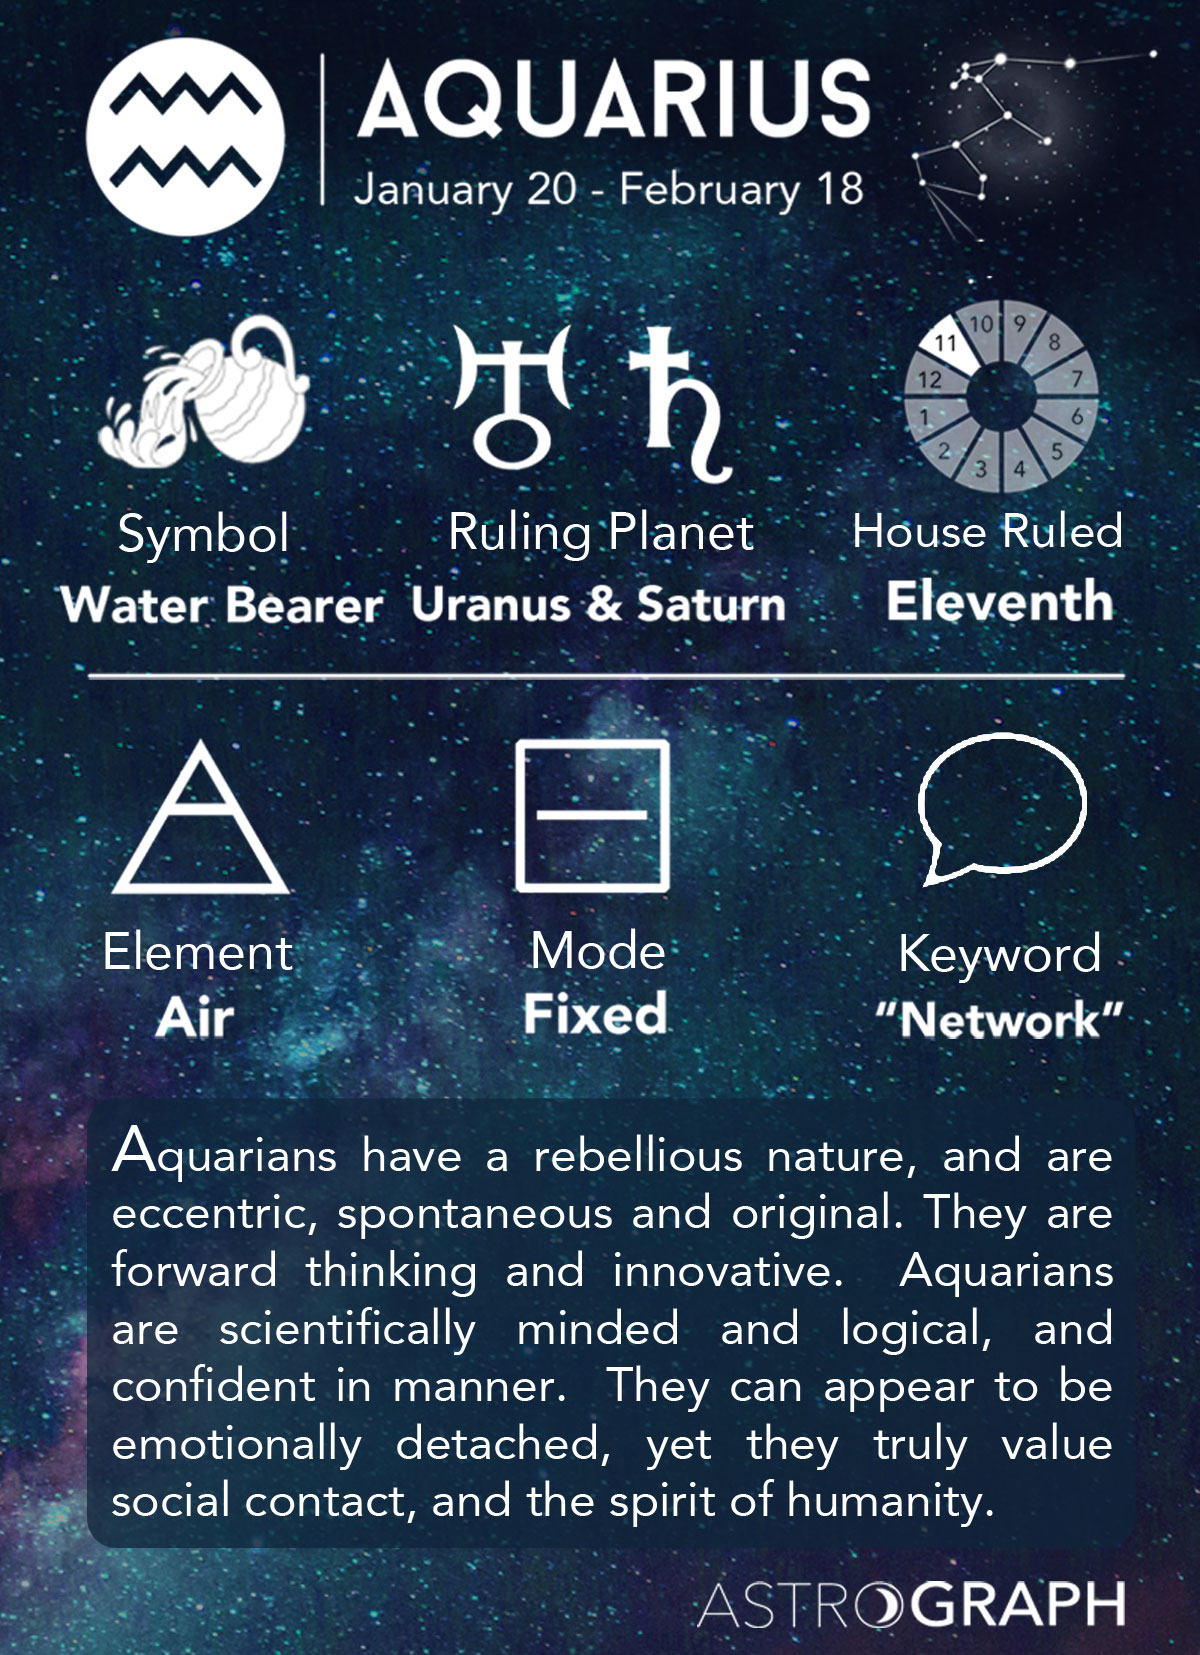 What Is An Aquarius?